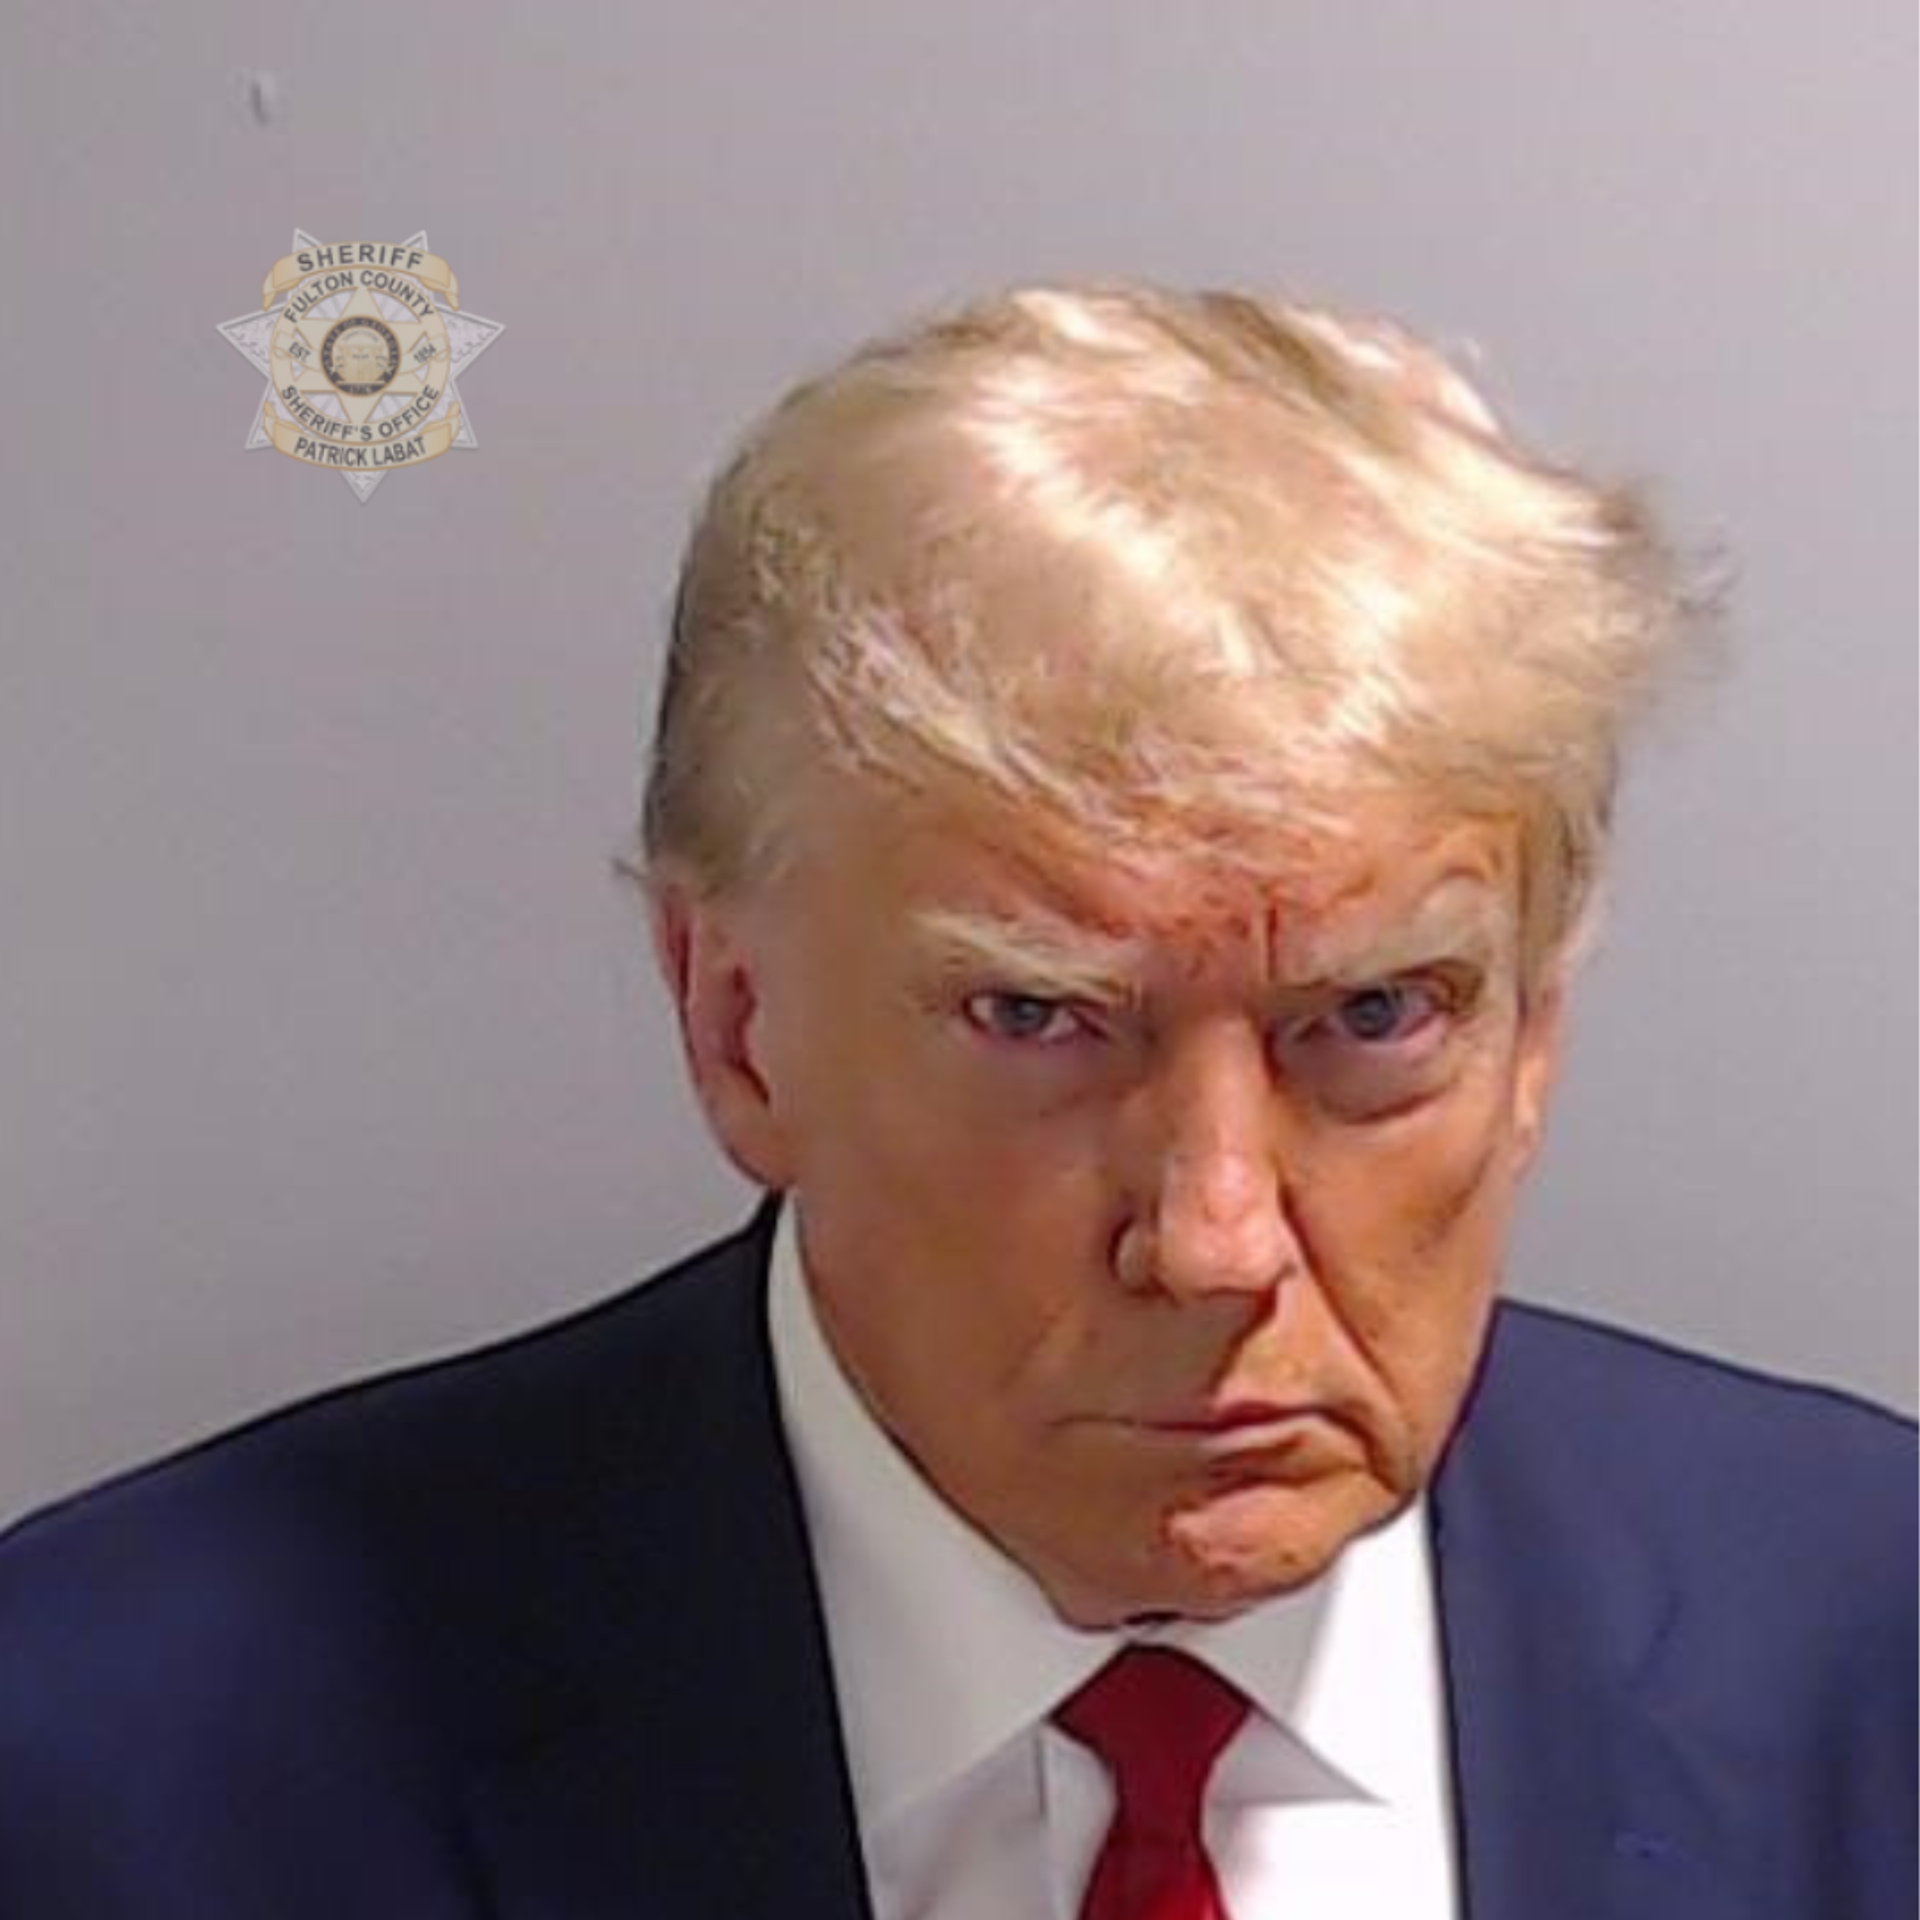 Donald Trump's mugshot.